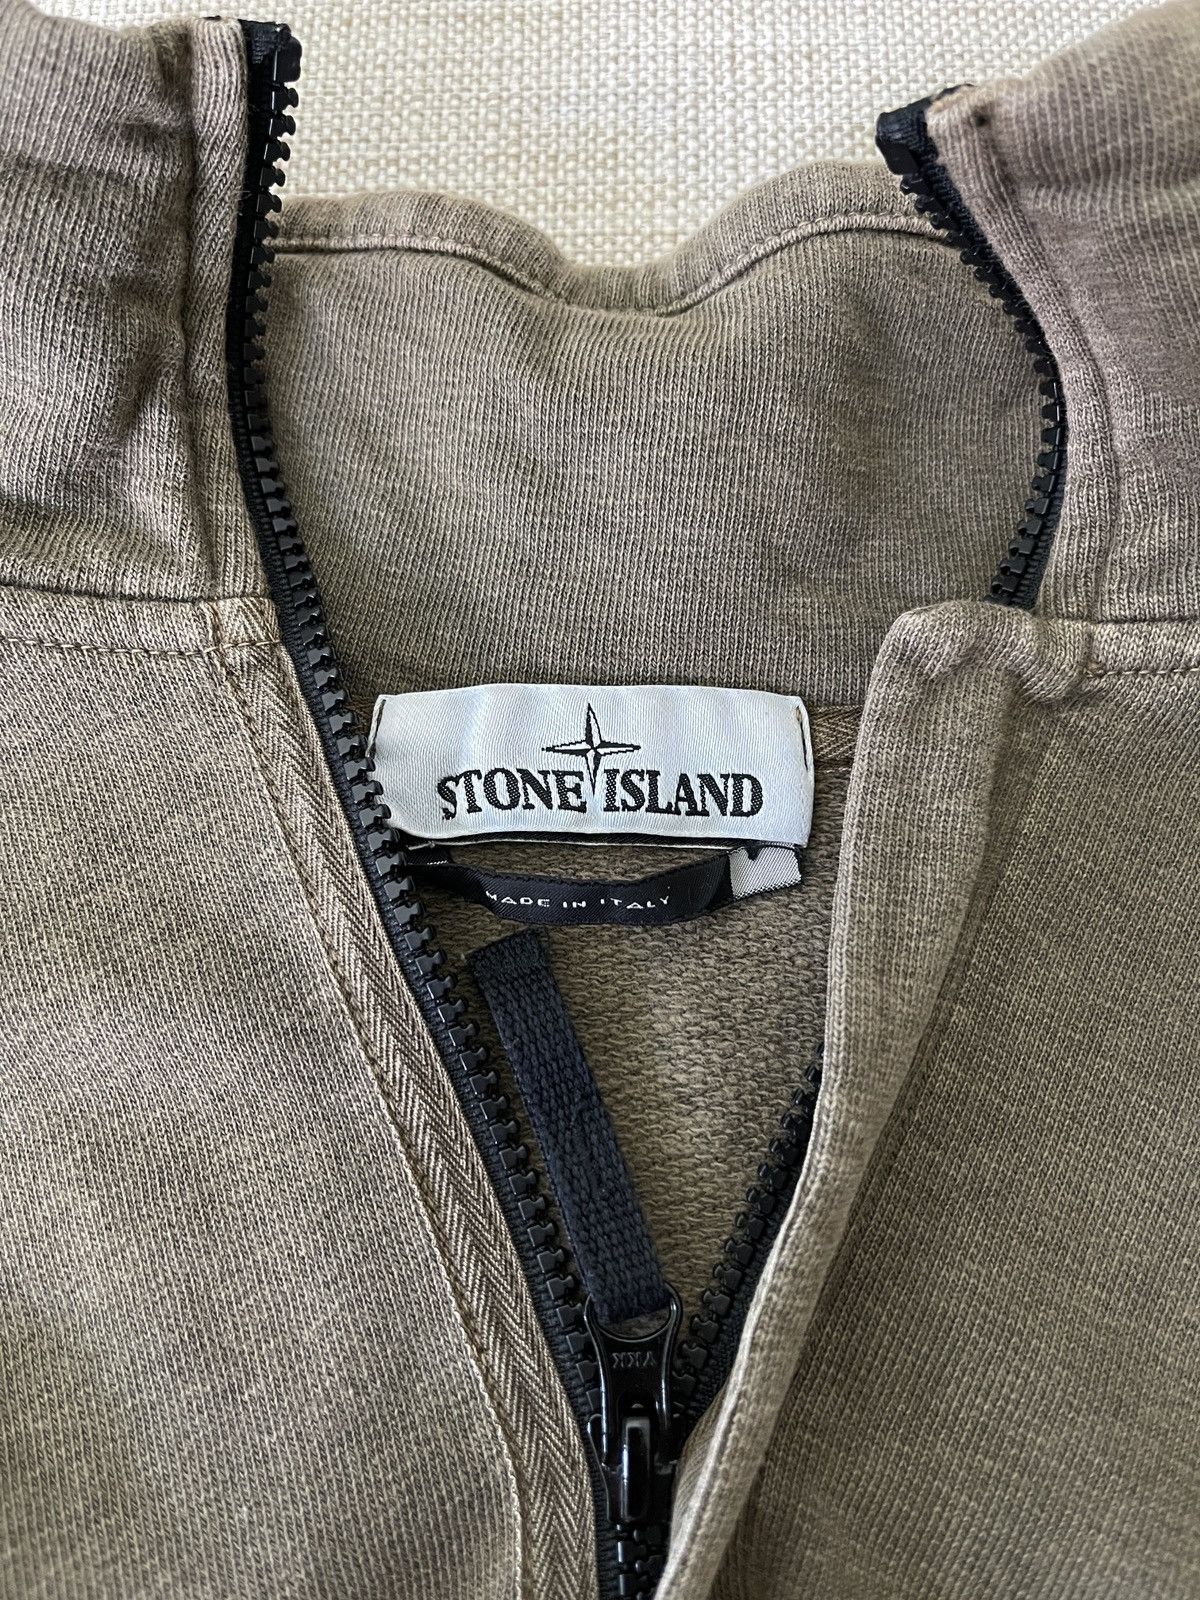 STEAL! 2010s Stone Island Patch 1/3 Zip Sweatshirt (S) - 5